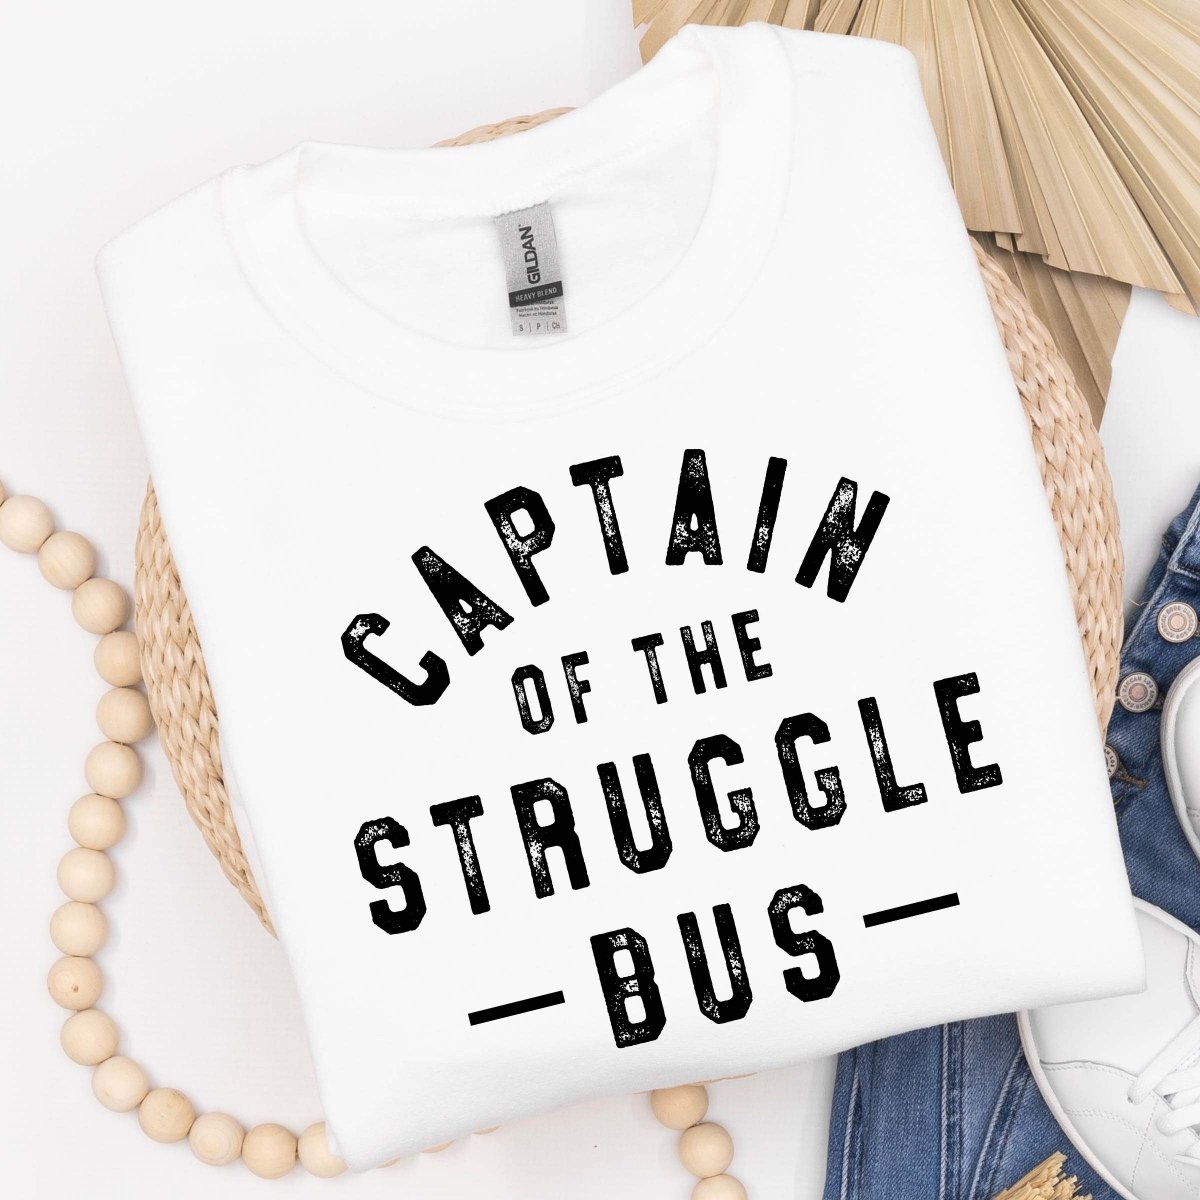 Captain of the Struggle Bus Wholesale Crewneck Sweatshirt - Limeberry Designs